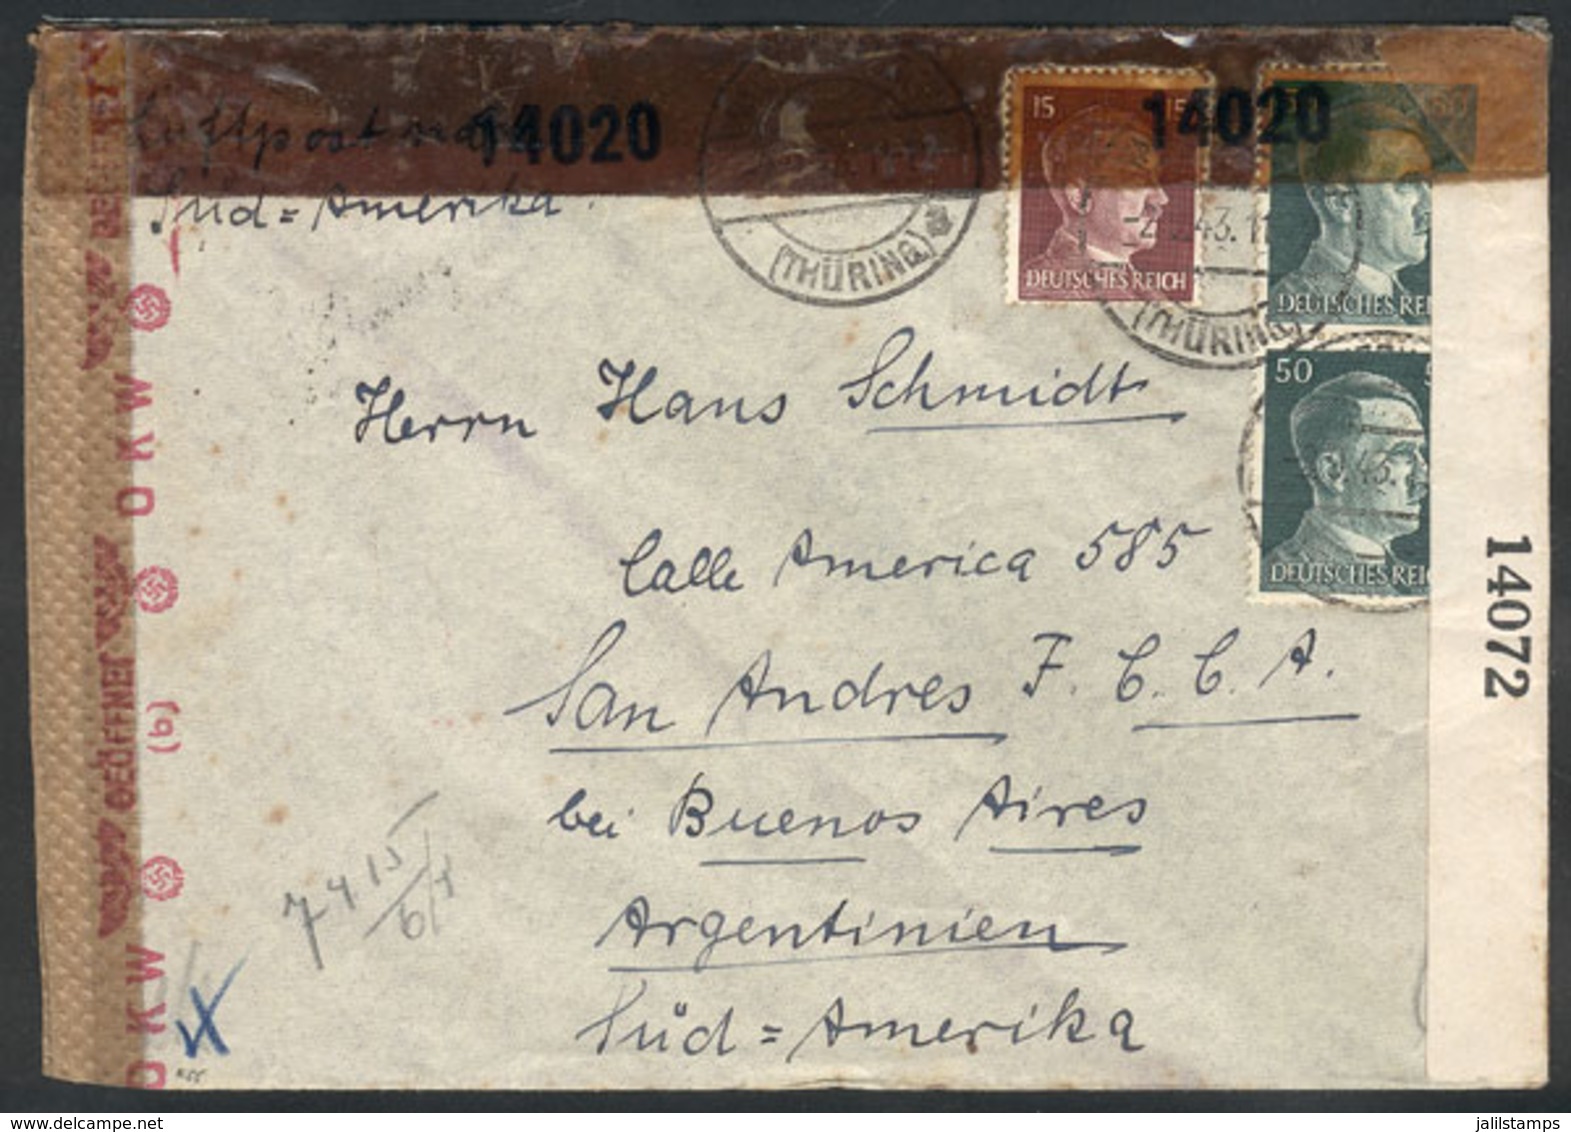 GERMANY: Airmail Cover Sent To Argentina On 2/SE/1943 With Interesting TRIPLE CENSORSHIP, VF Quality! - Préphilatélie